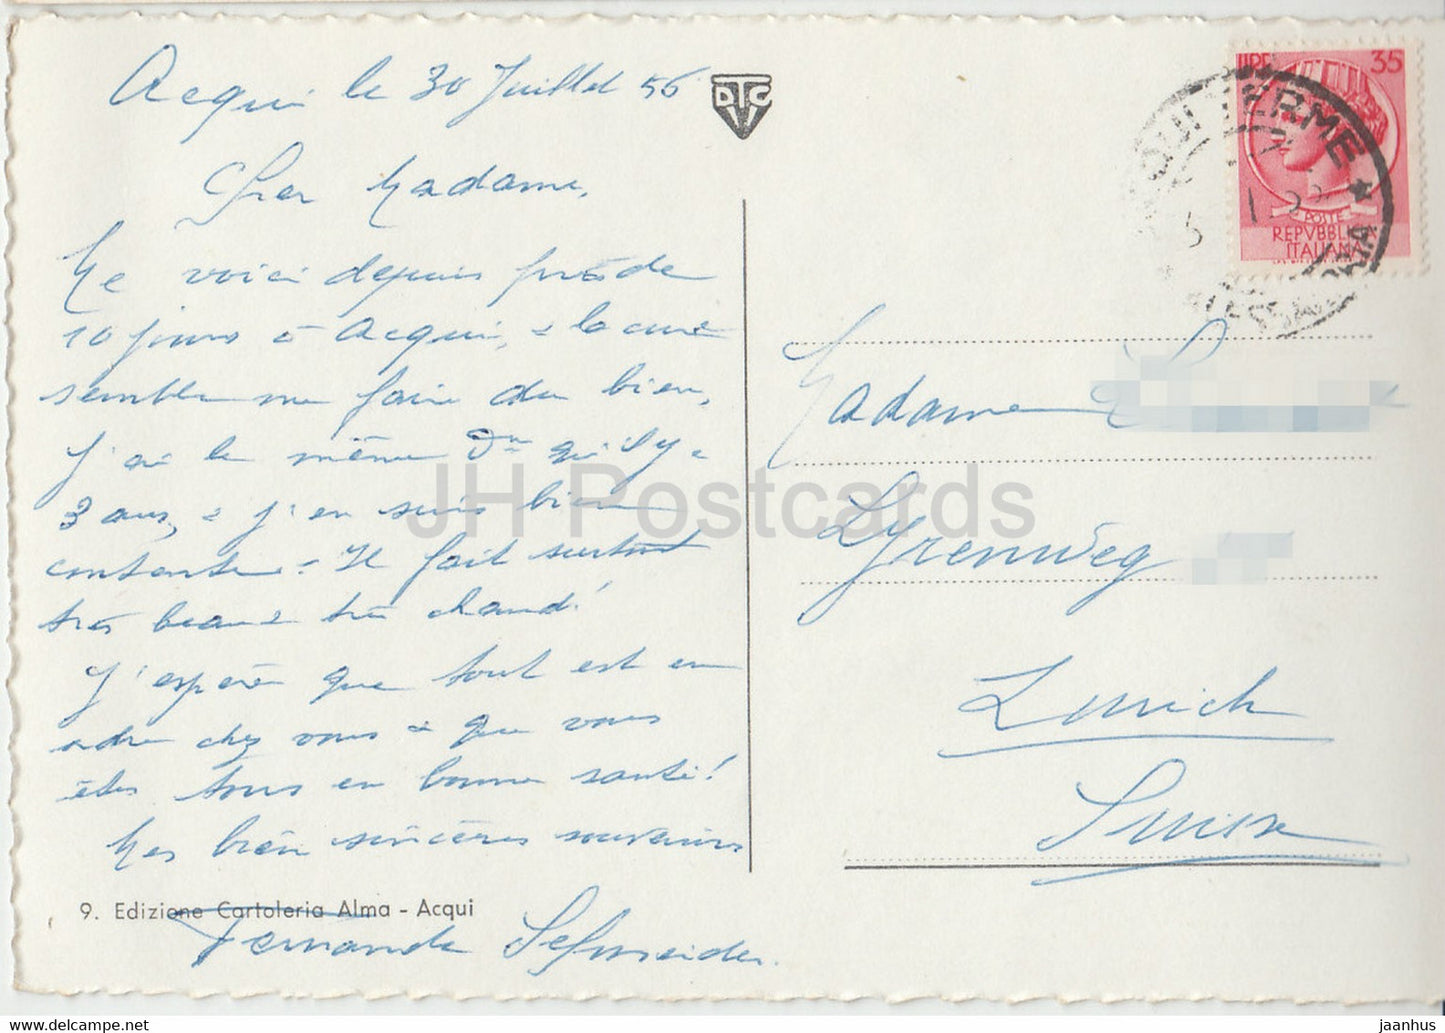 Acqui Terme - Via Giulio Monteverde - alte Postkarte - 1956 - Italien - gebraucht